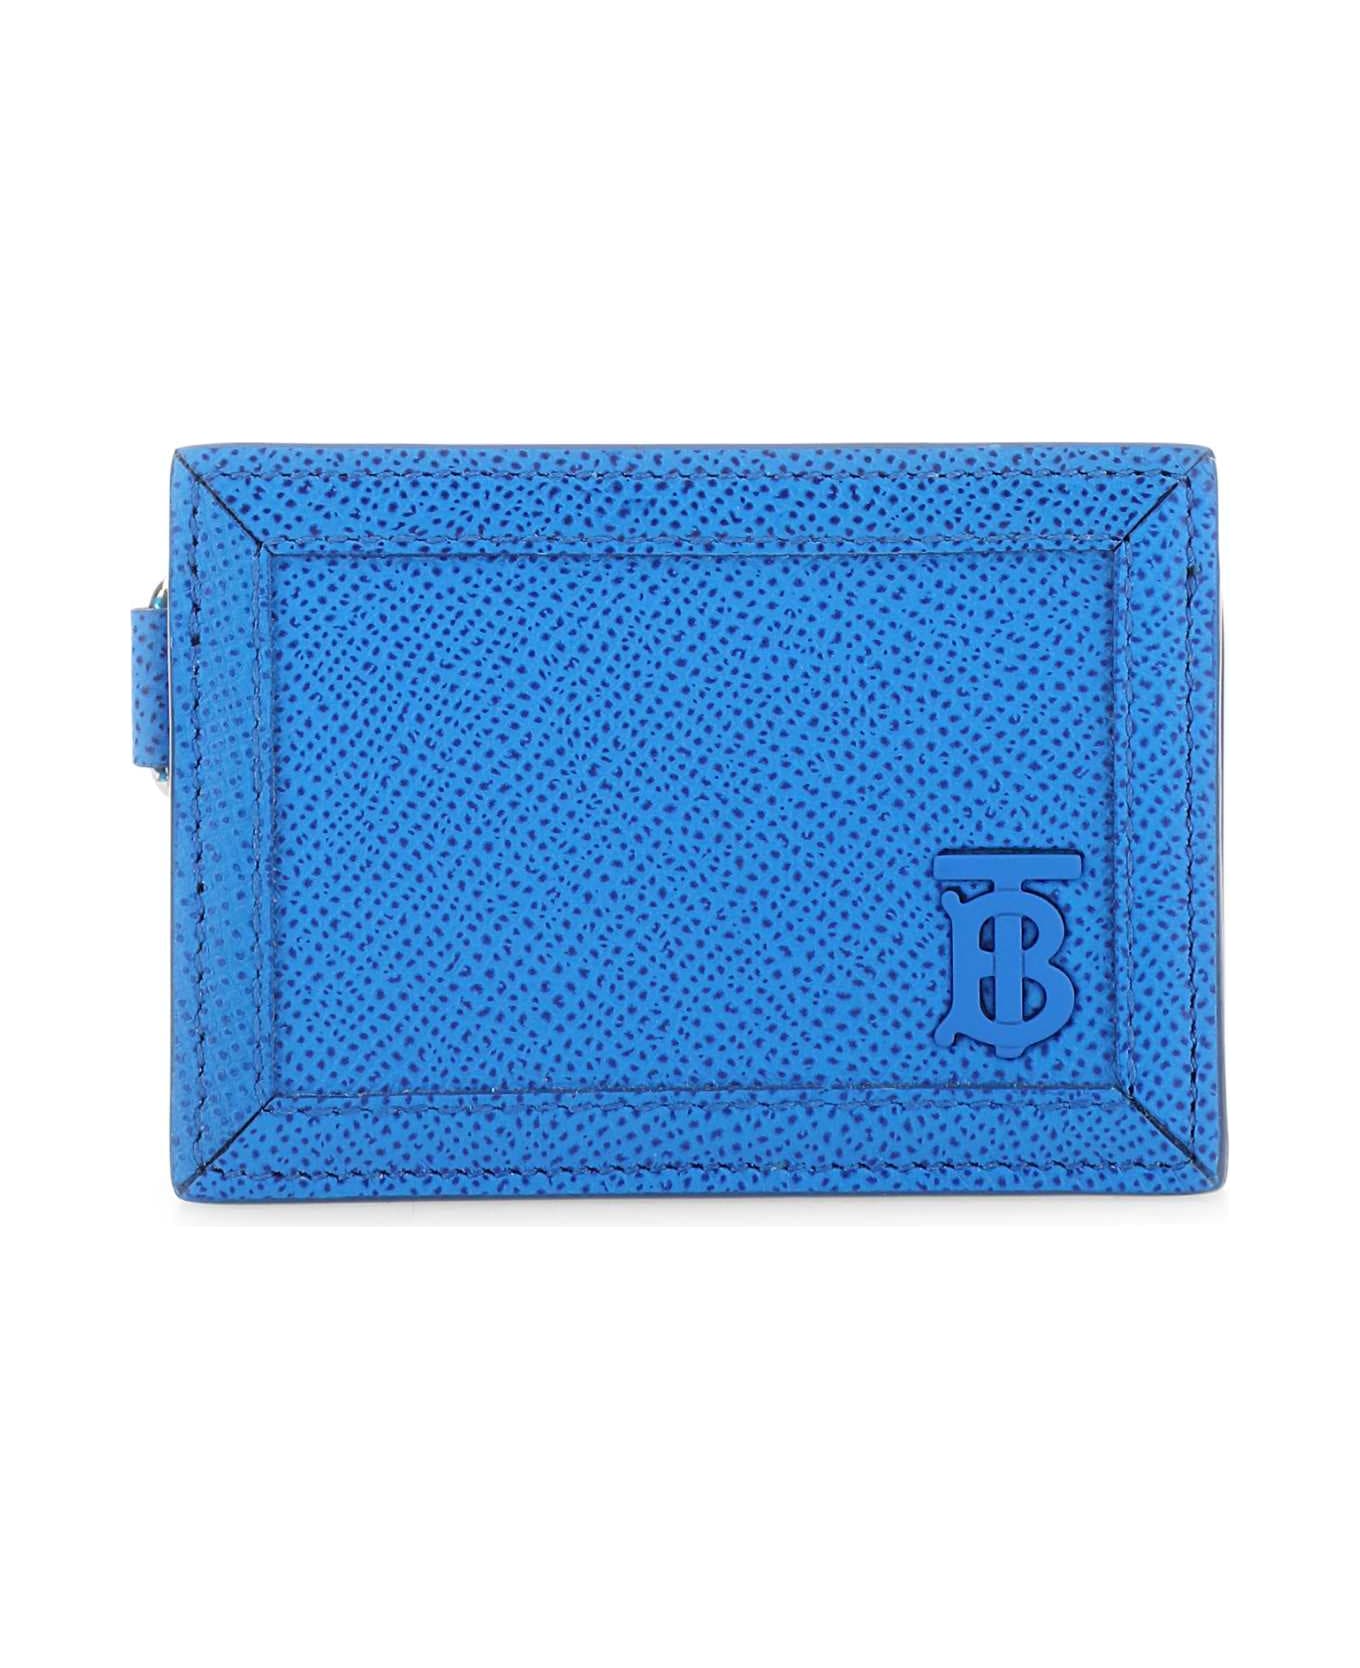 Burberry Turquoise Leather Card Holder - VIVIDBLUE